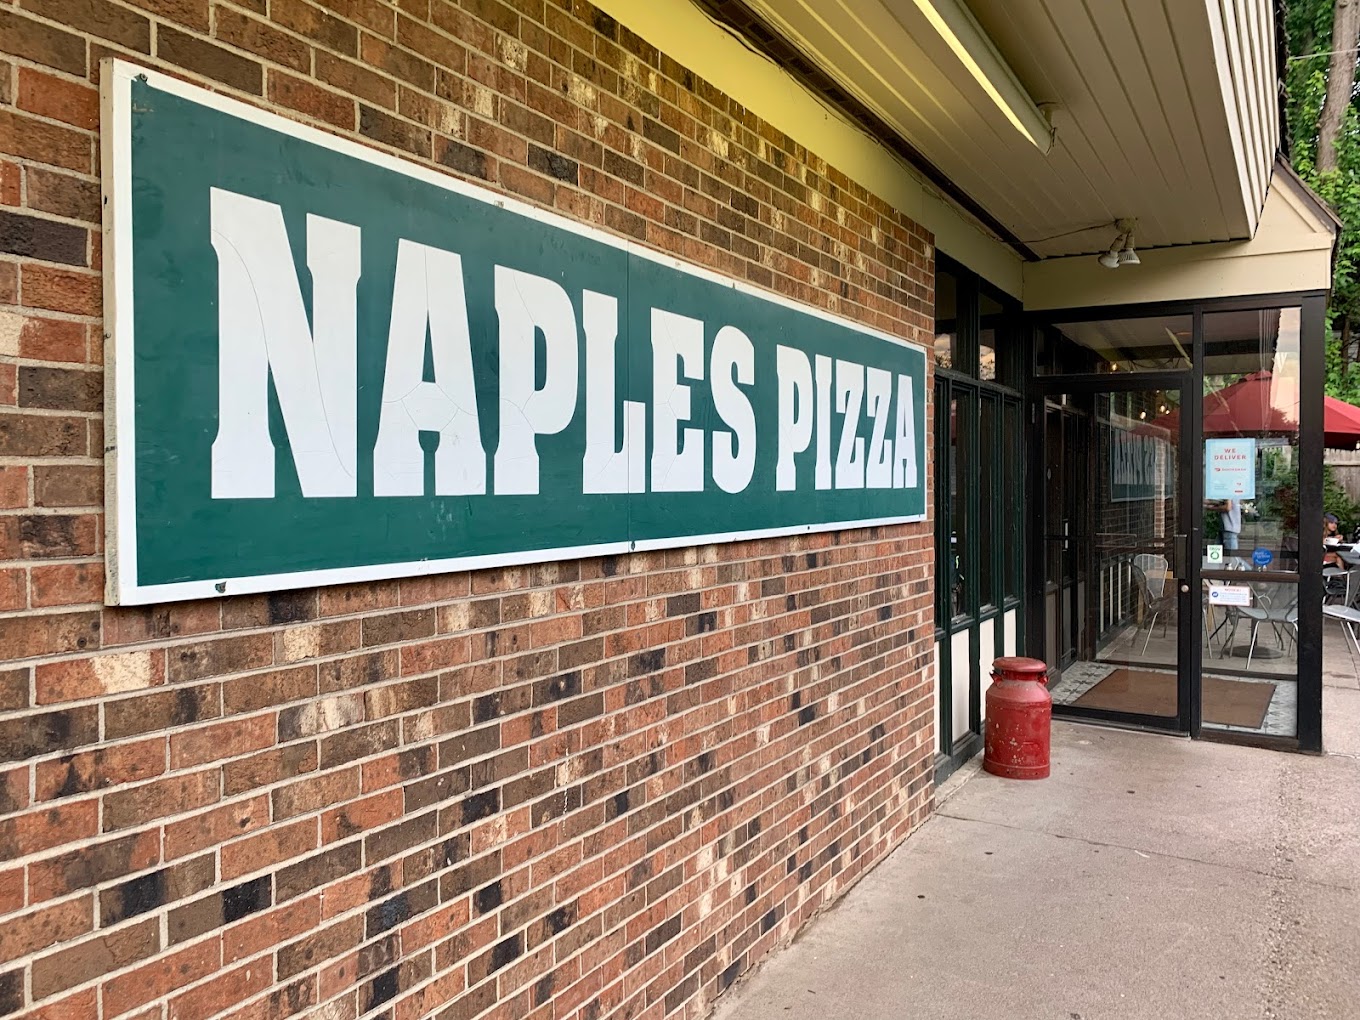 Naples Pizza Logo